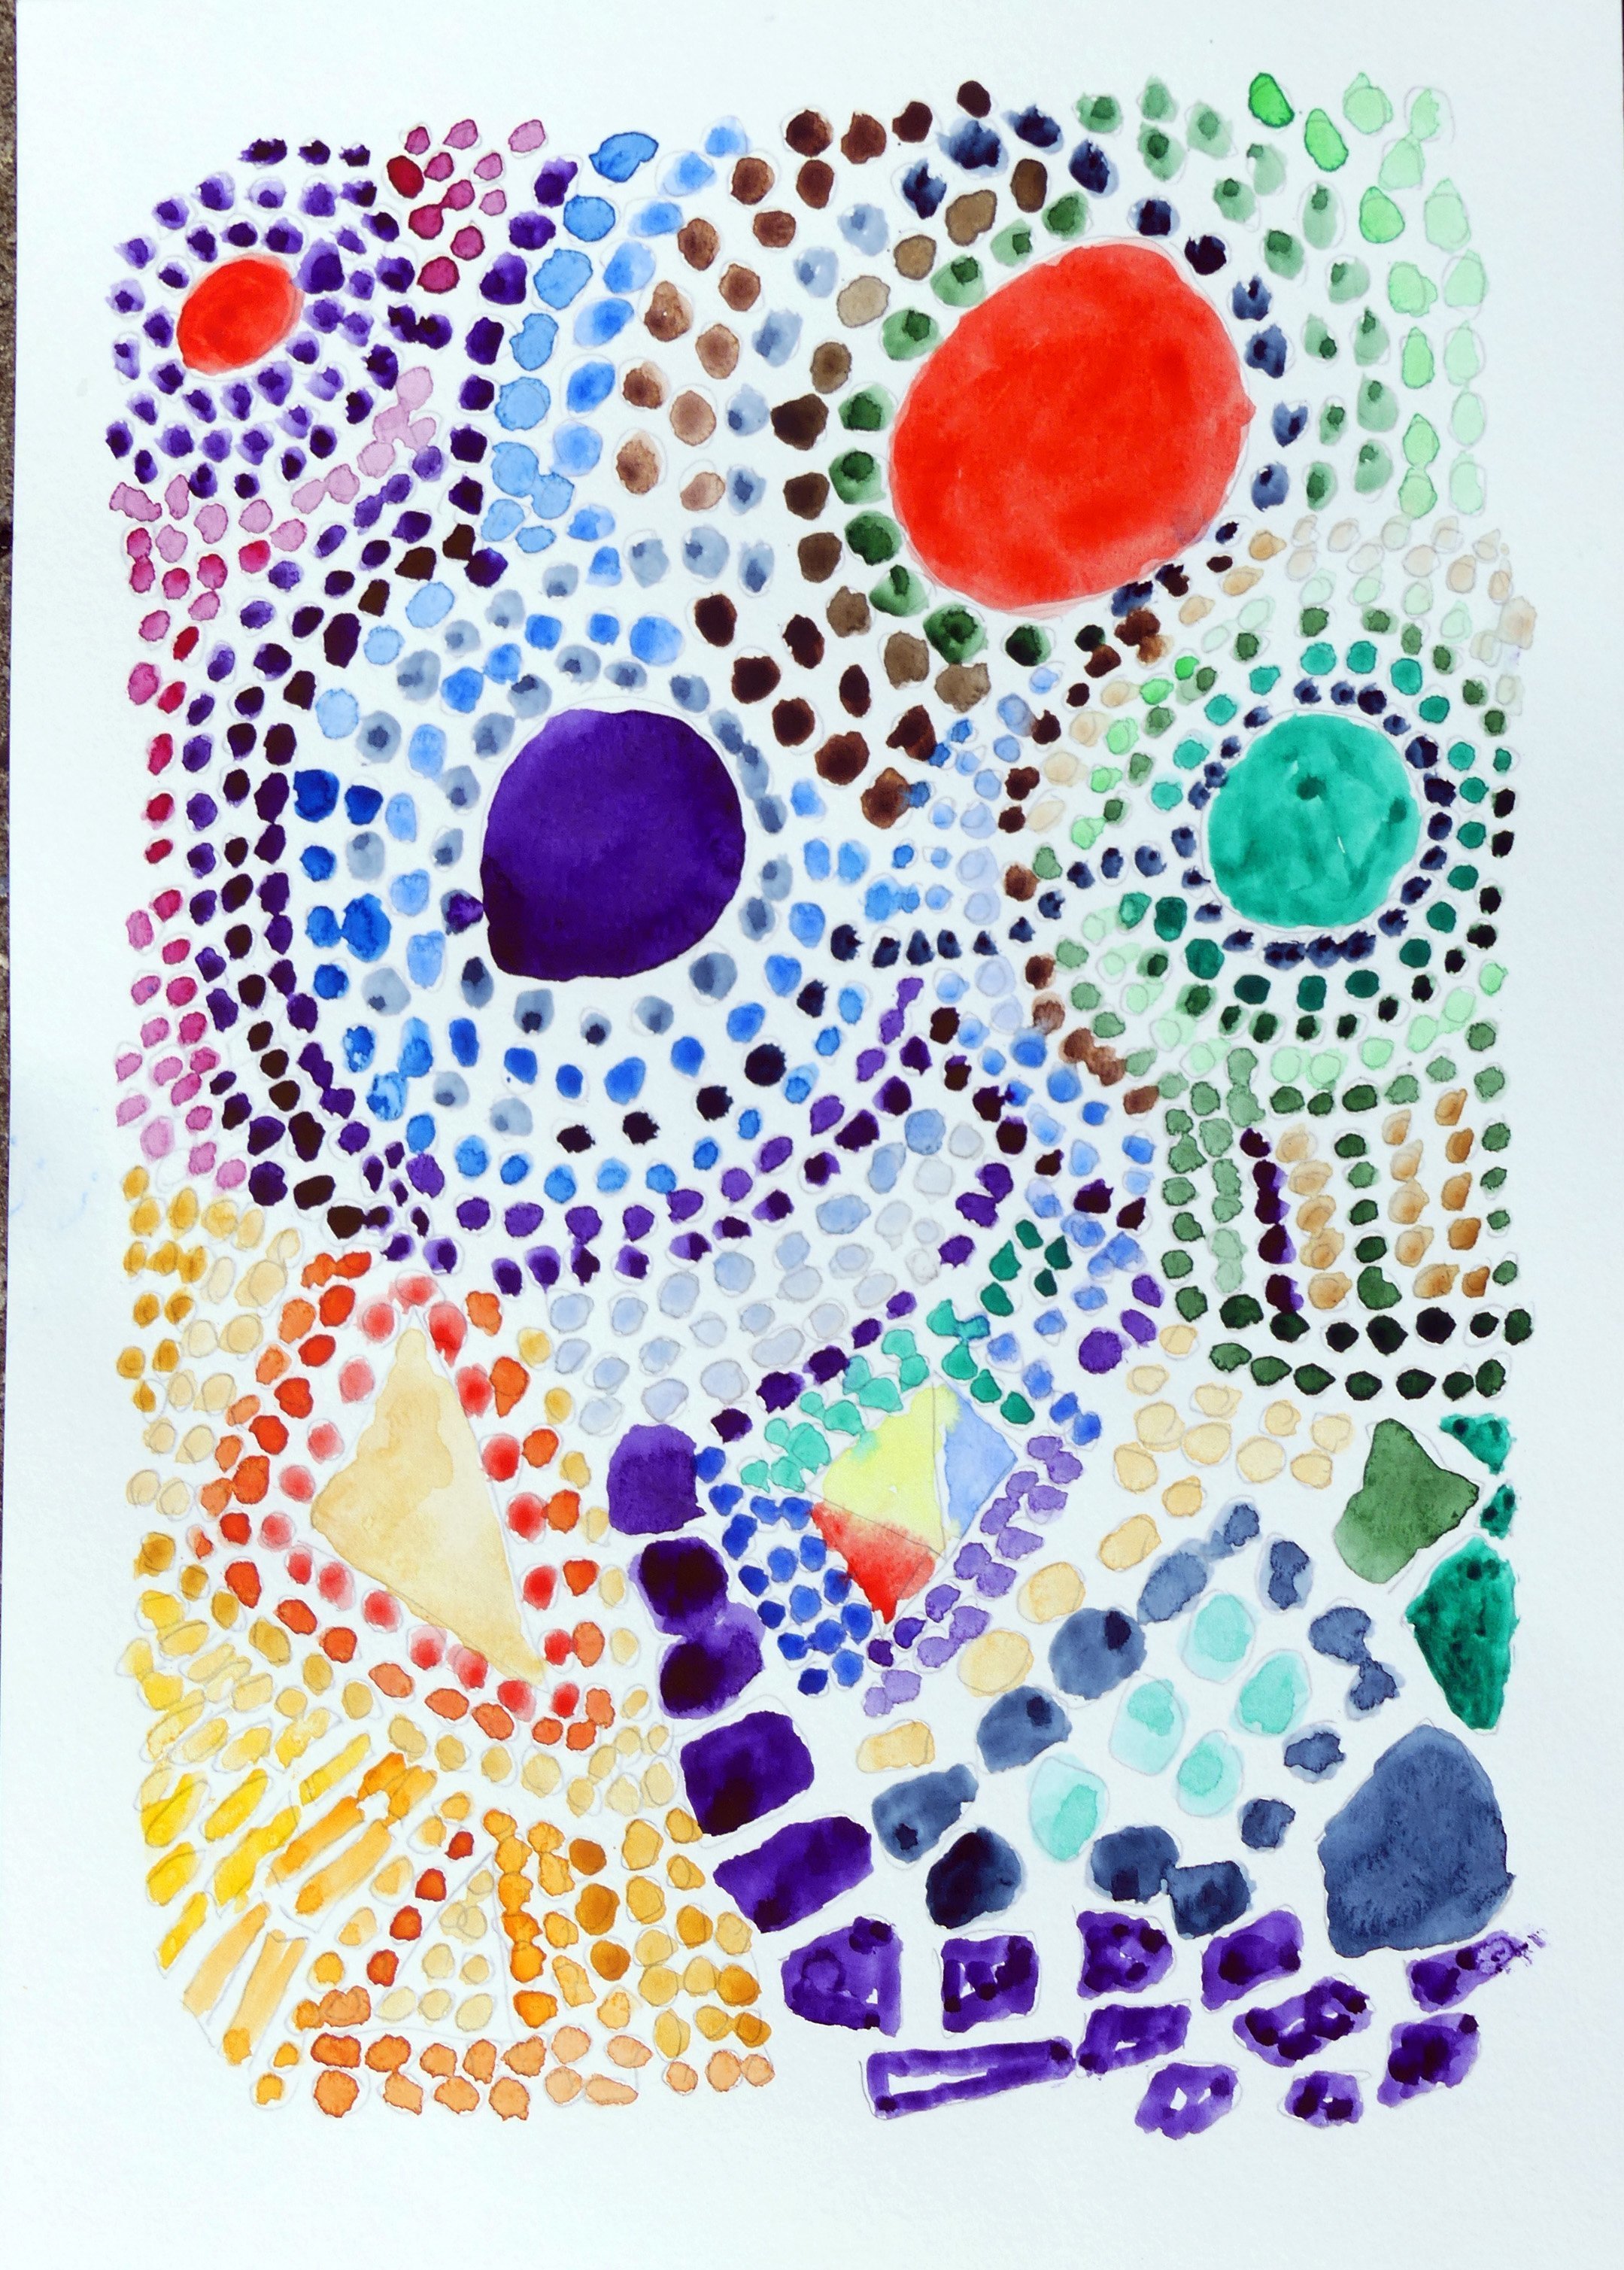 Palle Adamos Finn Jensen; Tunnels Of Light 4, 2021, Original Watercolor, 30 x 45 cm. Artwork description: 241 universes of colors, made og small cirkles of light. Blue, Green OrangeUltraq Marine colors...